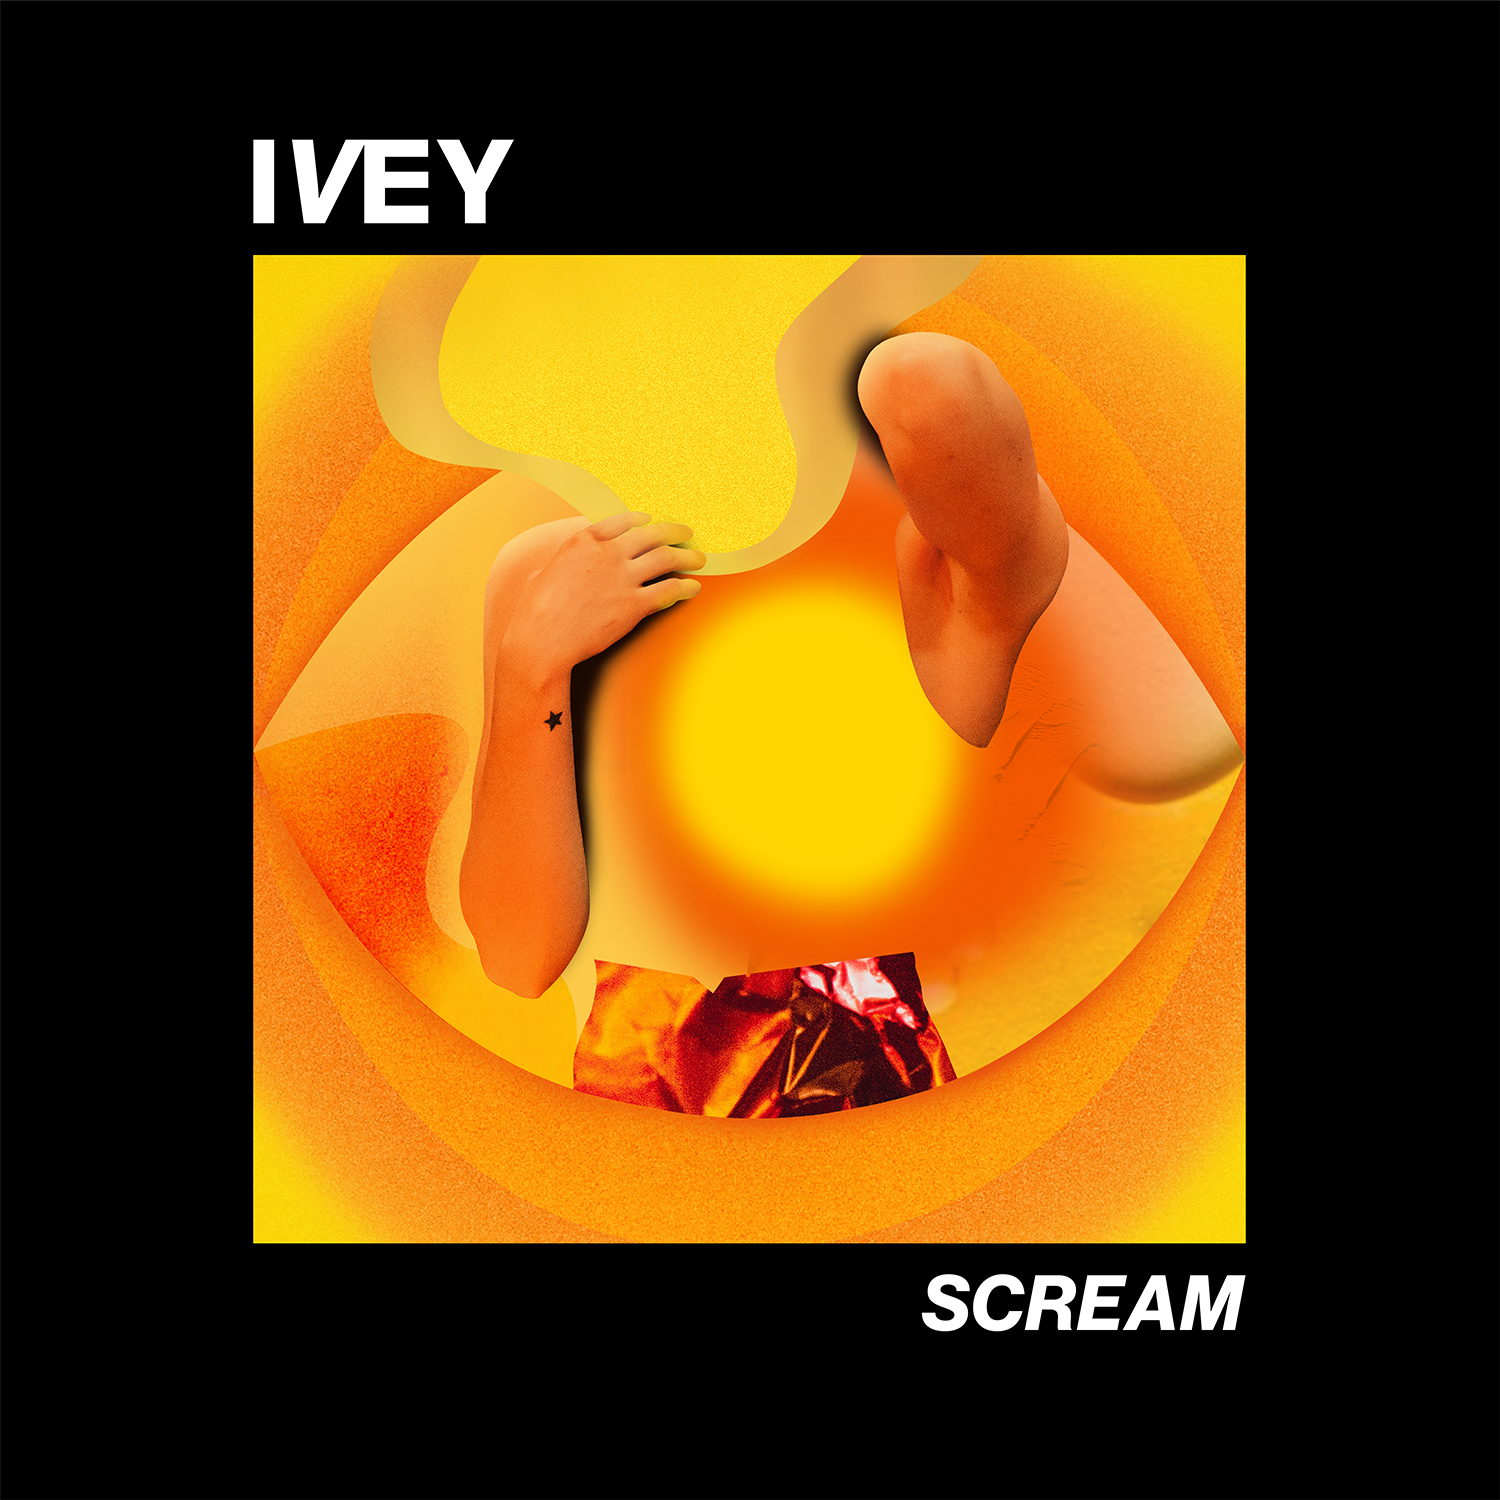  : Scream (Lucky136)